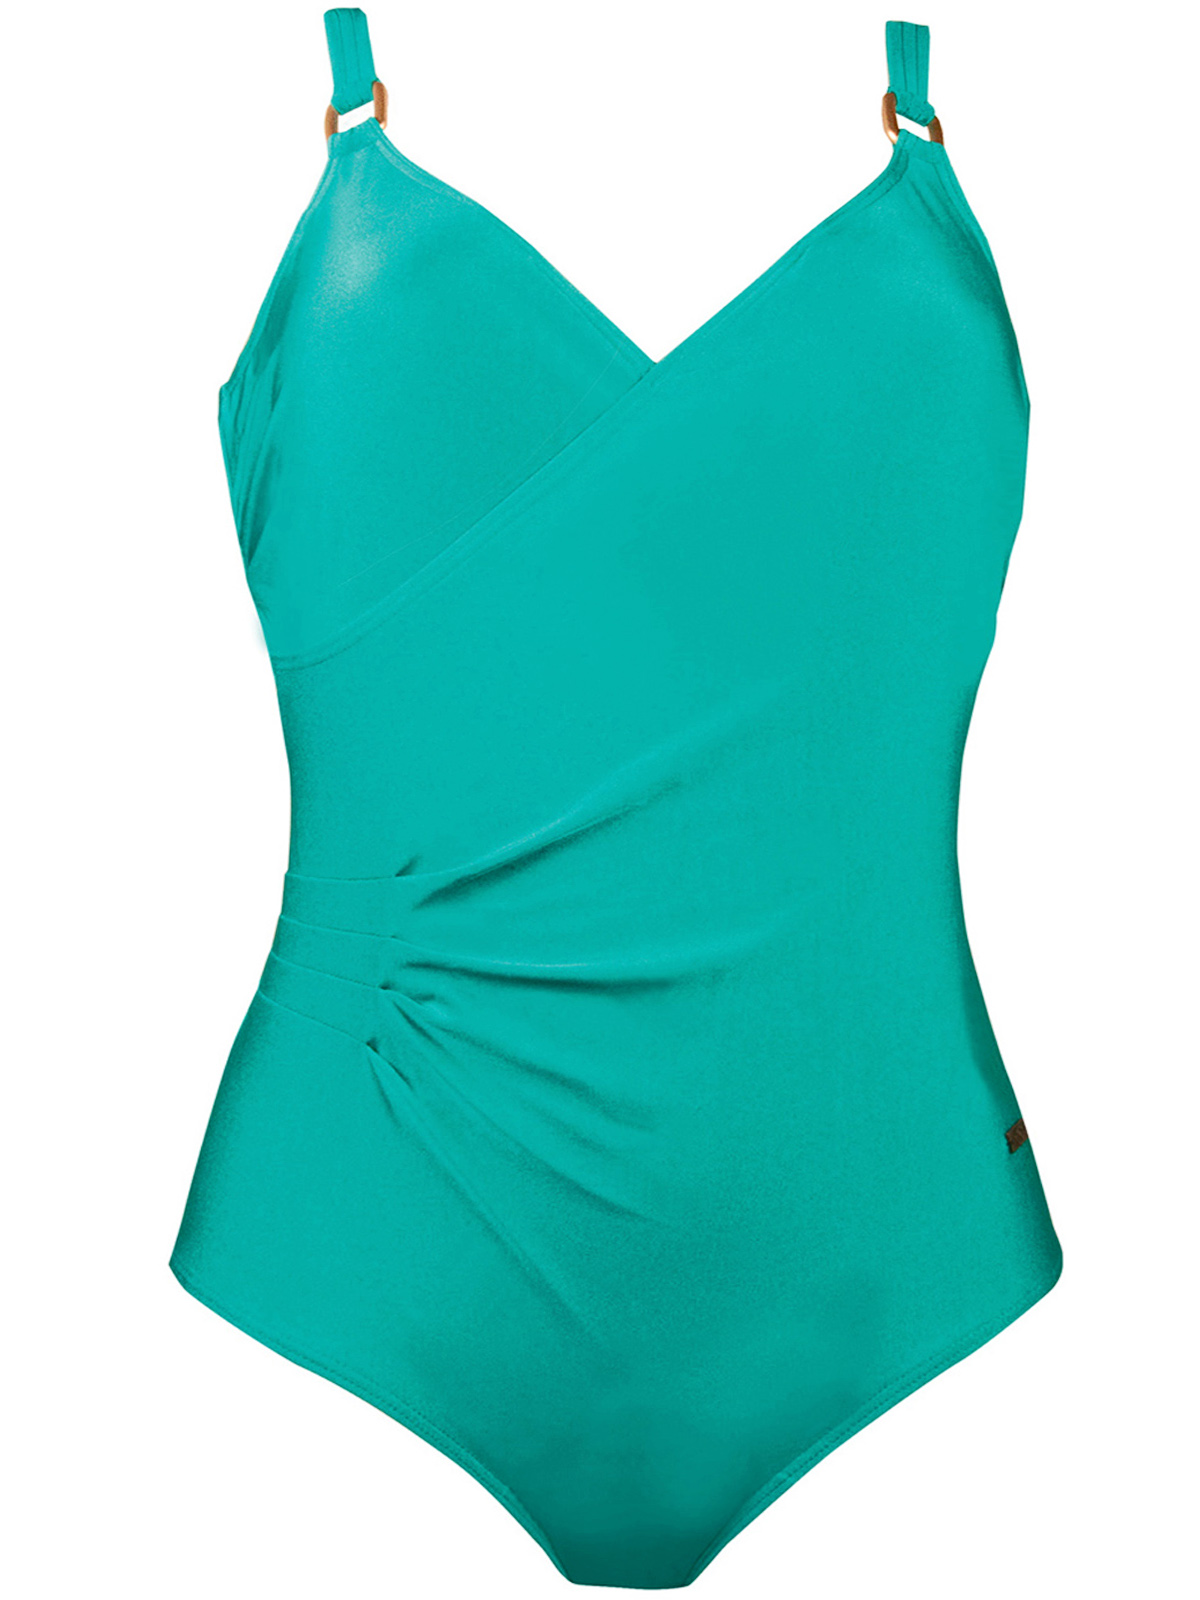 Naturana - - Naturana ASSORTED Plain & Printed Swimsuits - Size 10 to 12